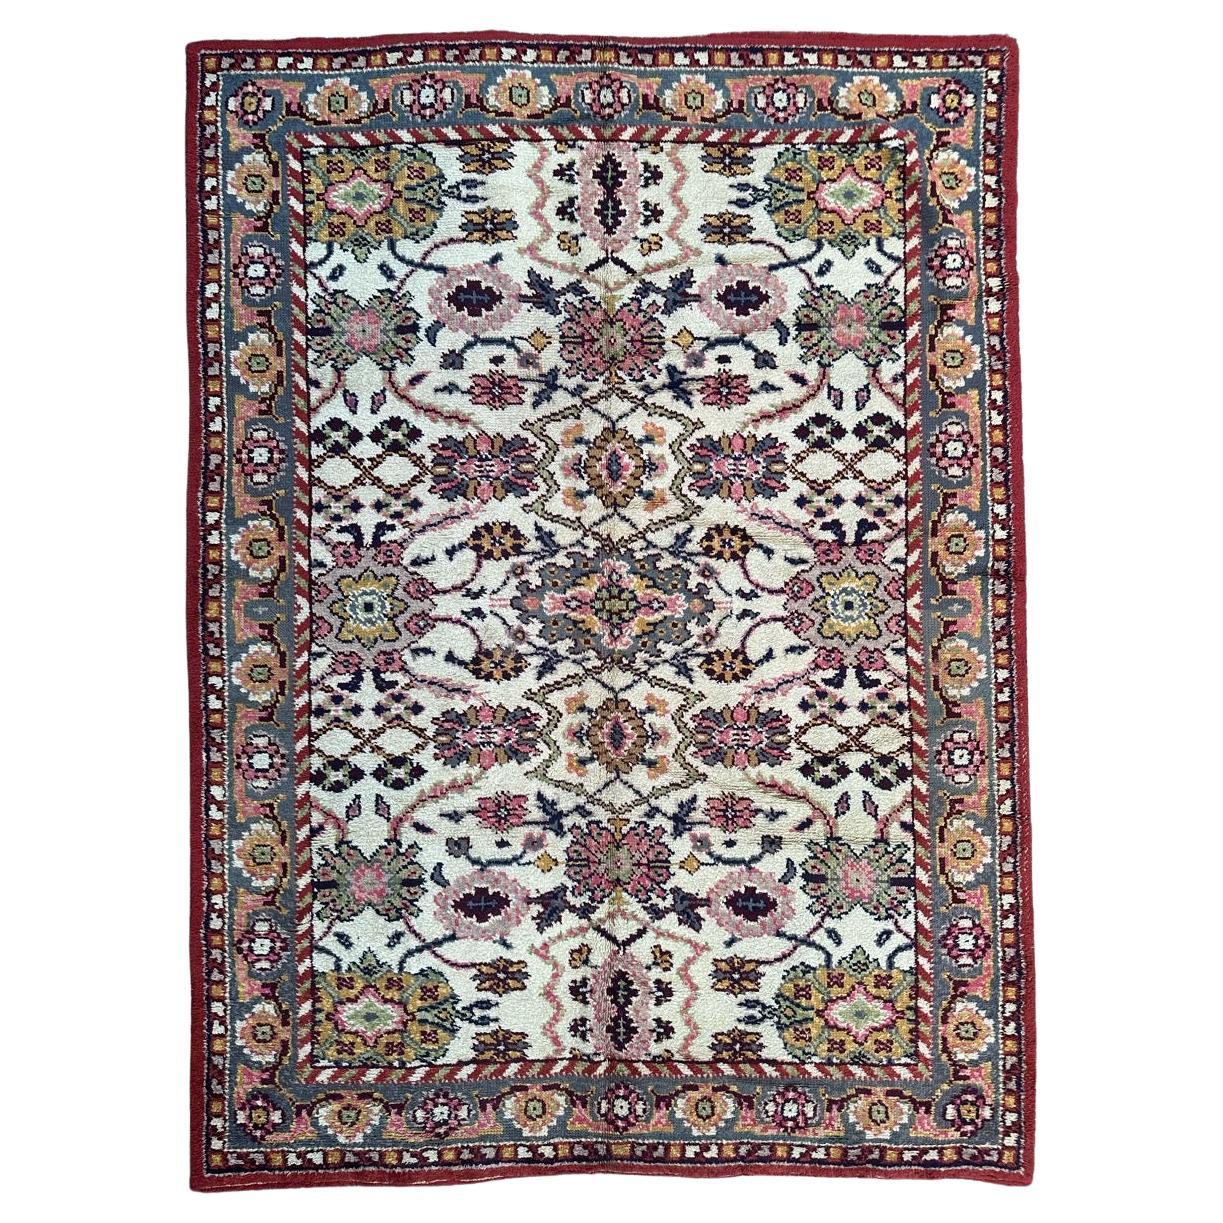 Bobyrug’s pretty antique large Spanish oushak rug For Sale